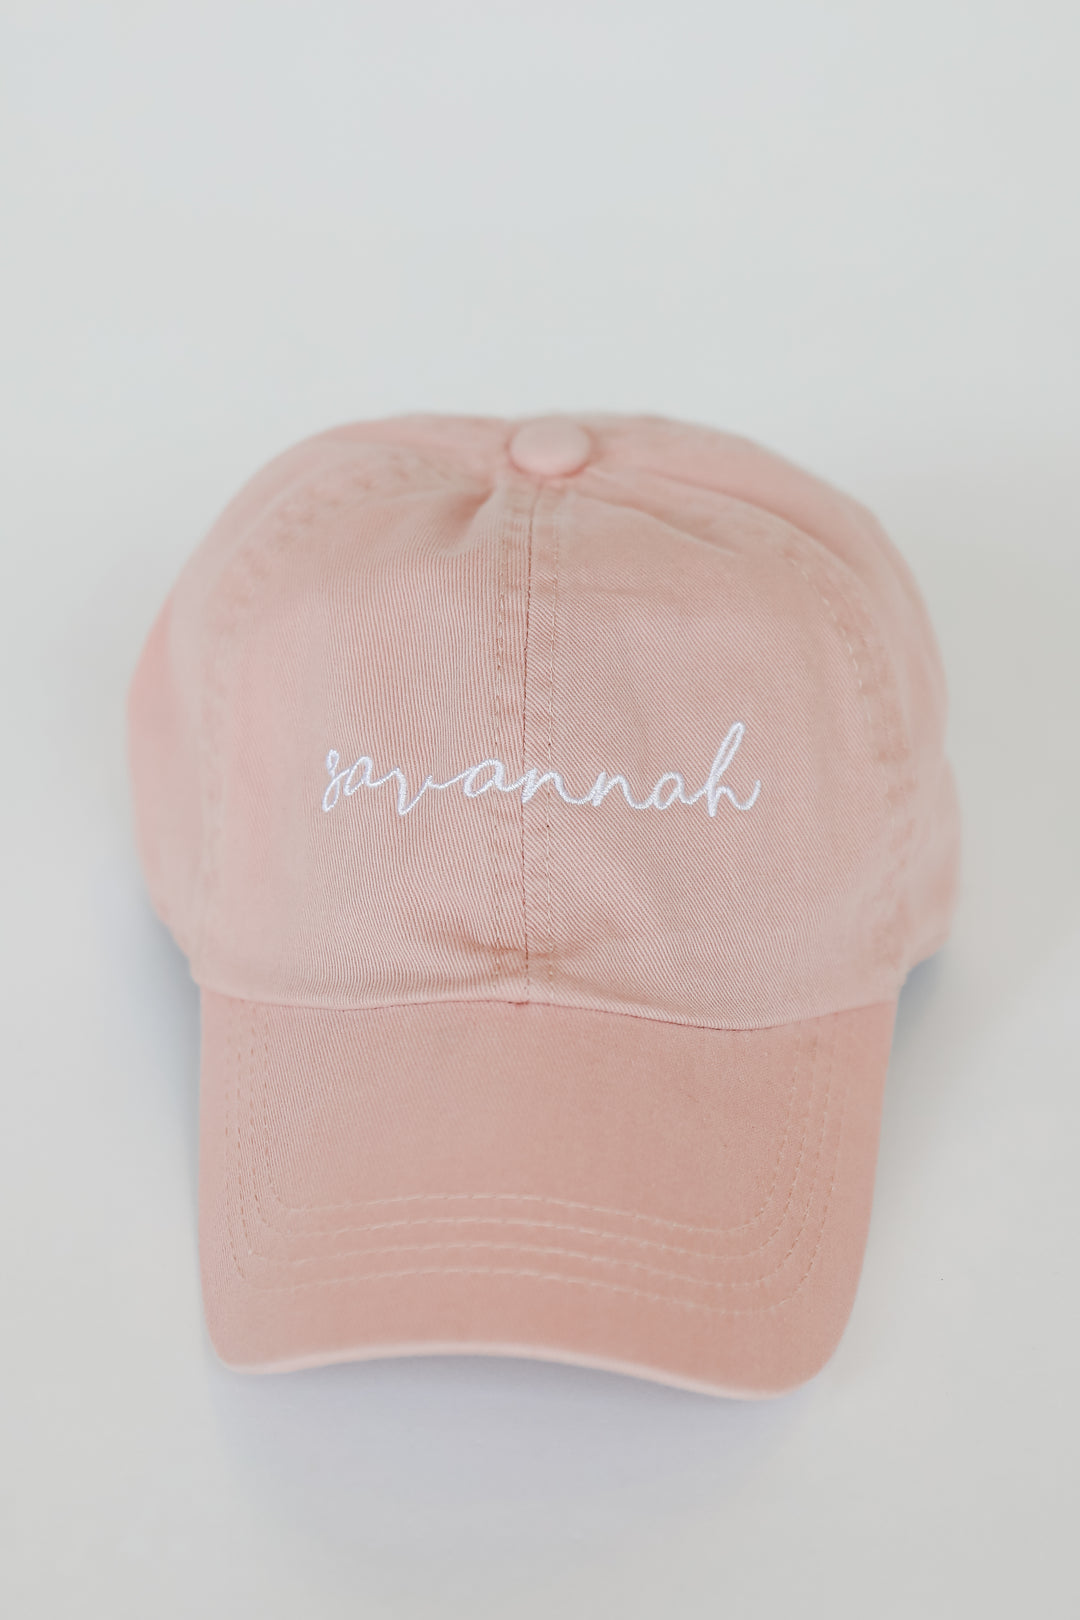 Savannah Embroidered Hat in blush